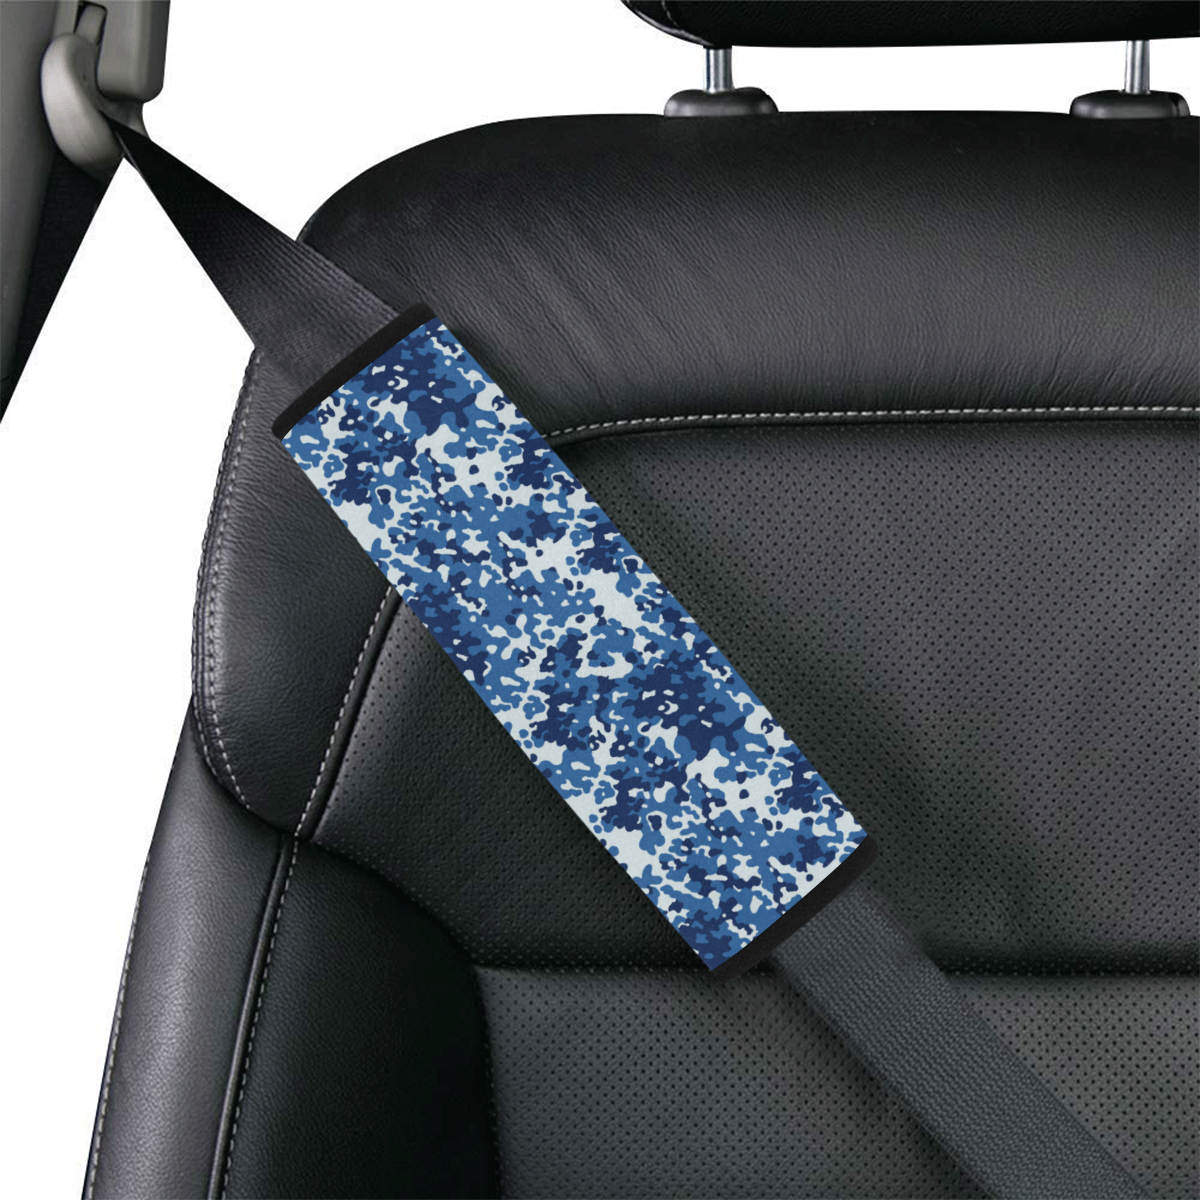 Digital Blue Camouflage Car Seat Belt Cover 7''x8.5''